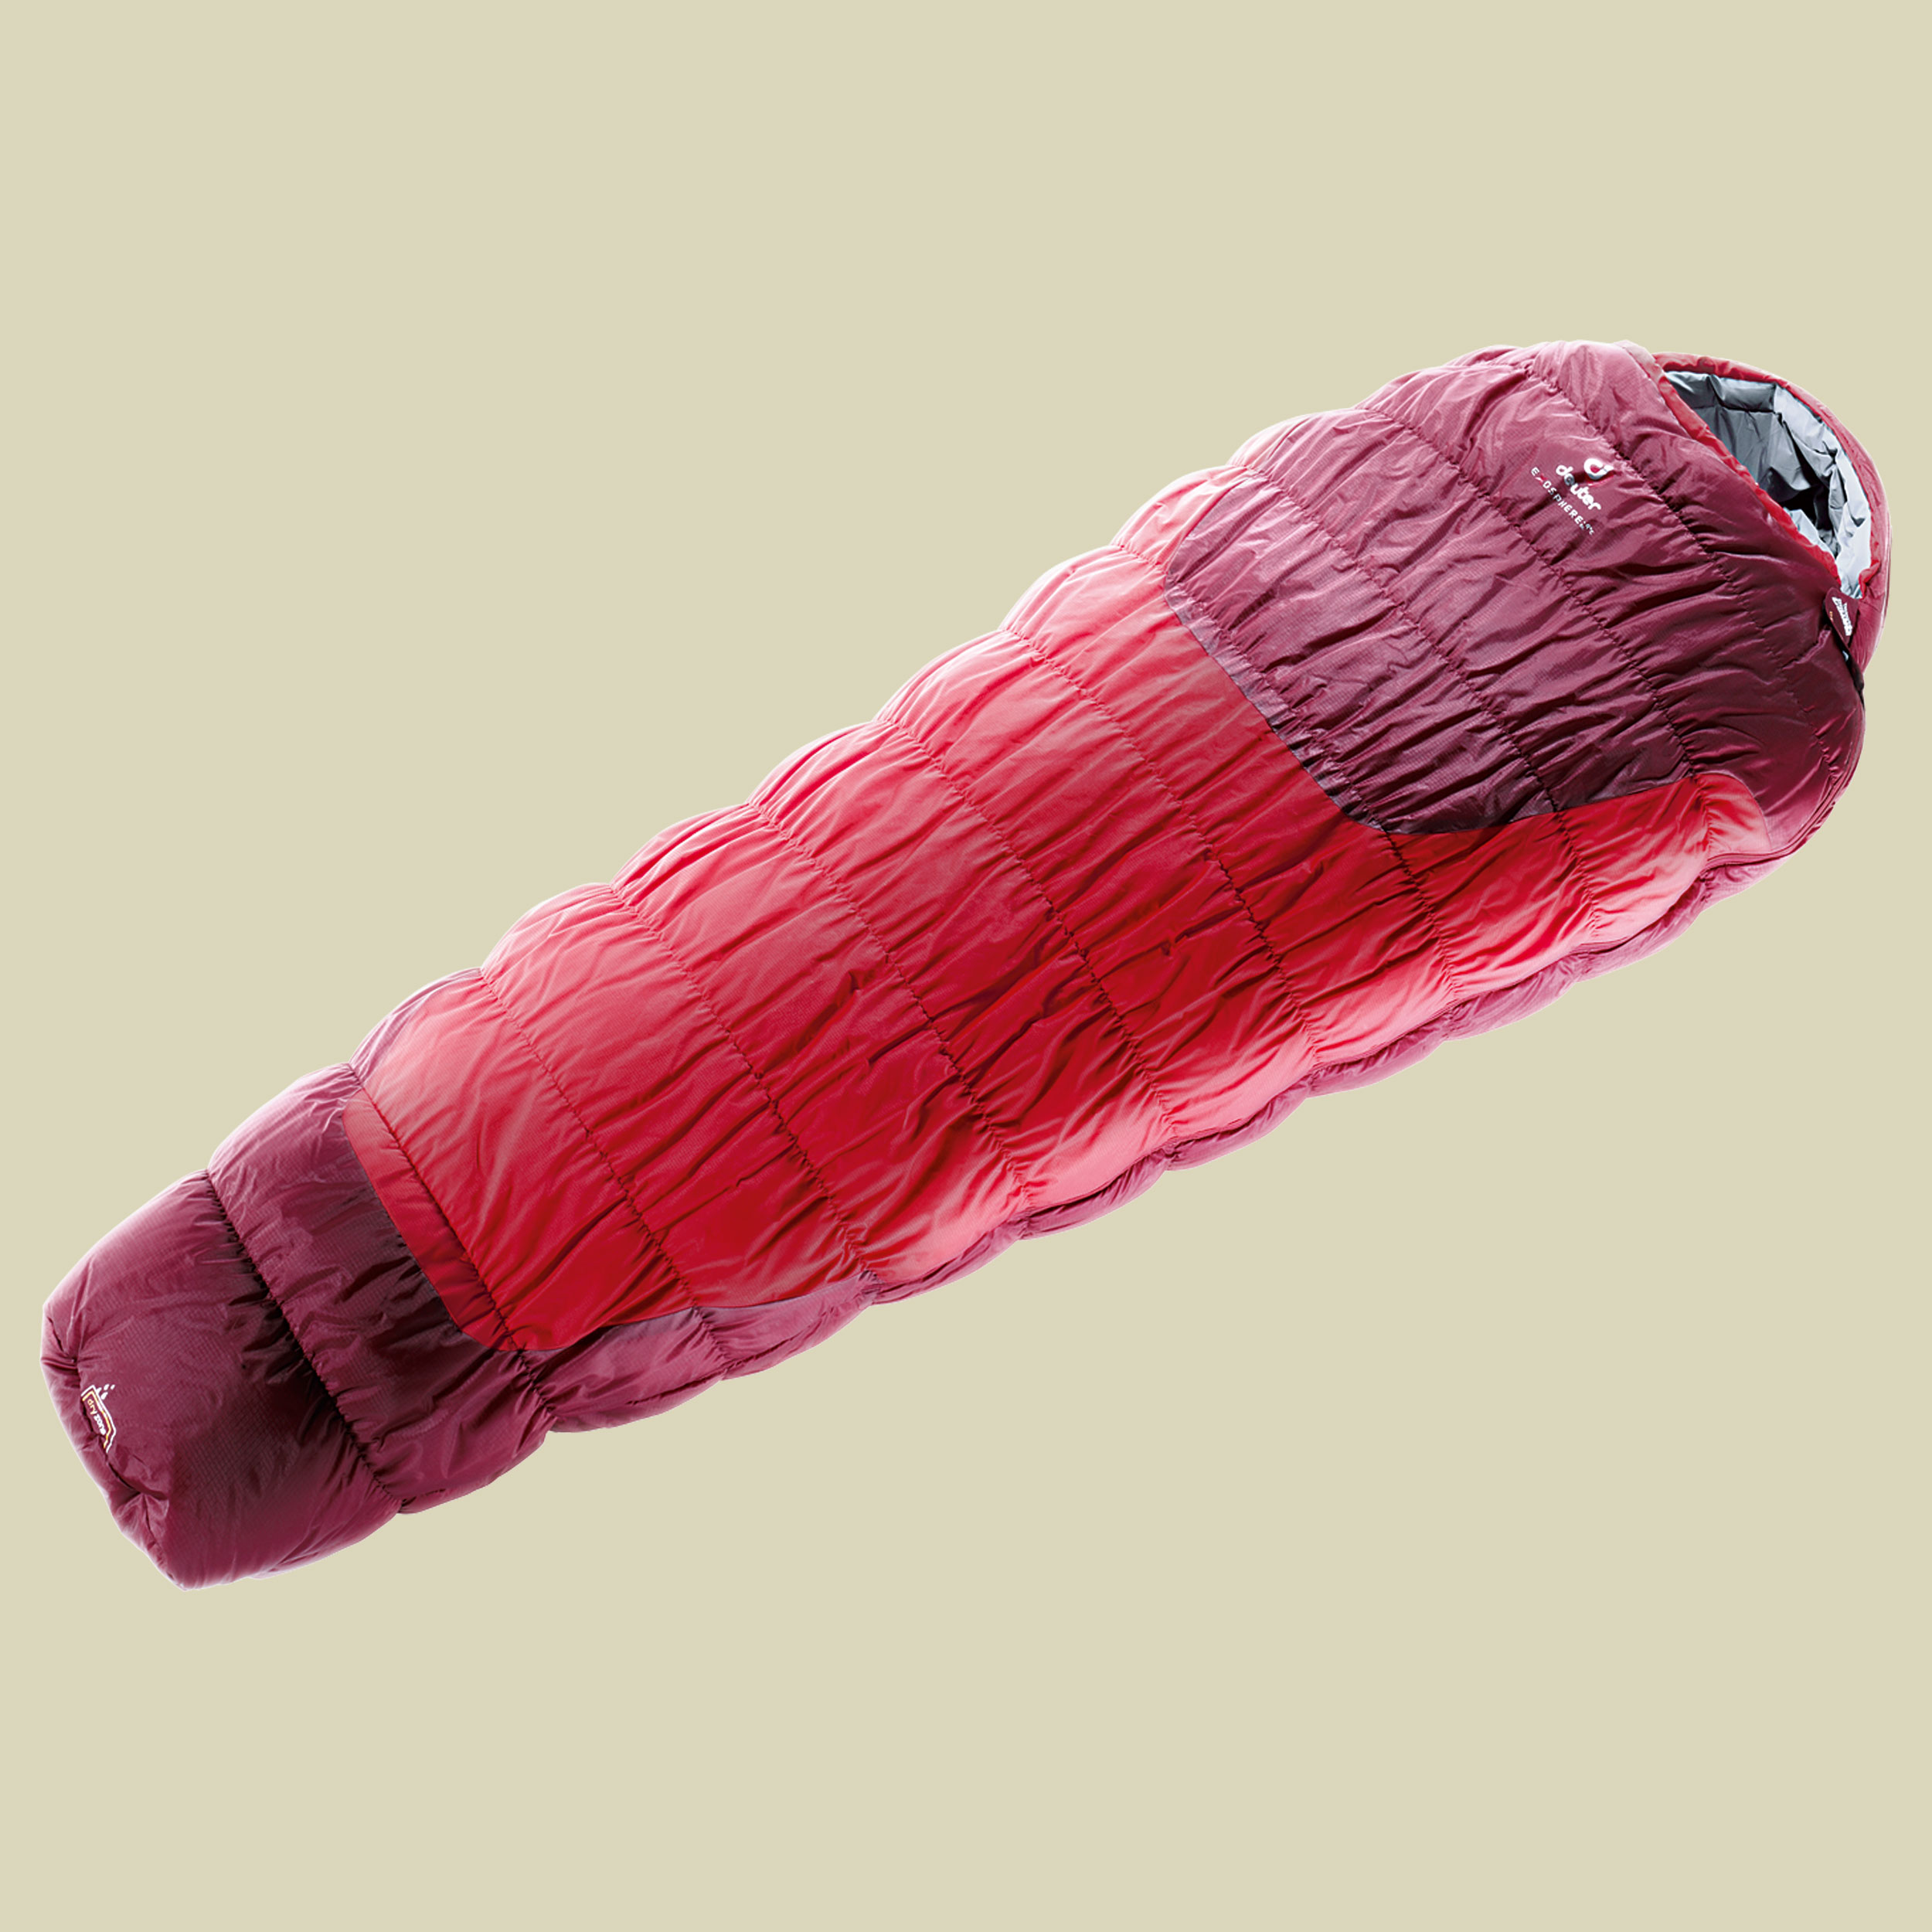 Exosphere -4° bis Körpergröße 185 cm Farbe fire-cranberry, Reißverschluss rechts